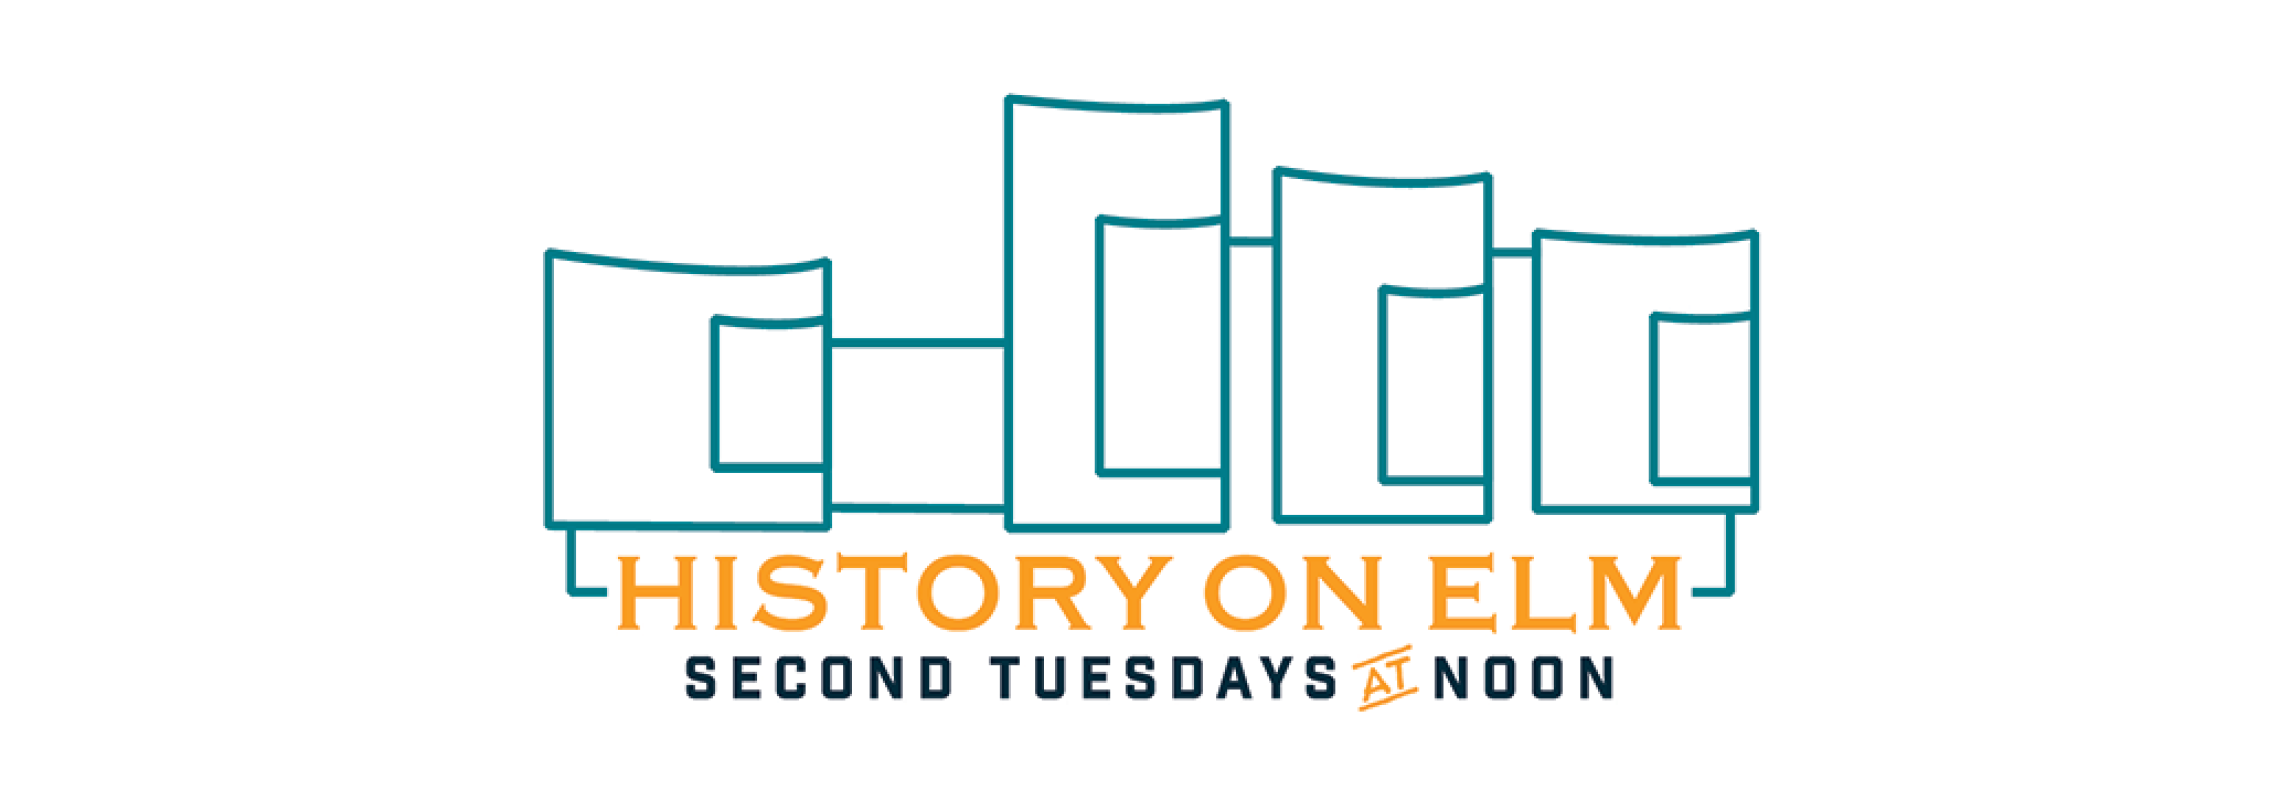 History on elm logo